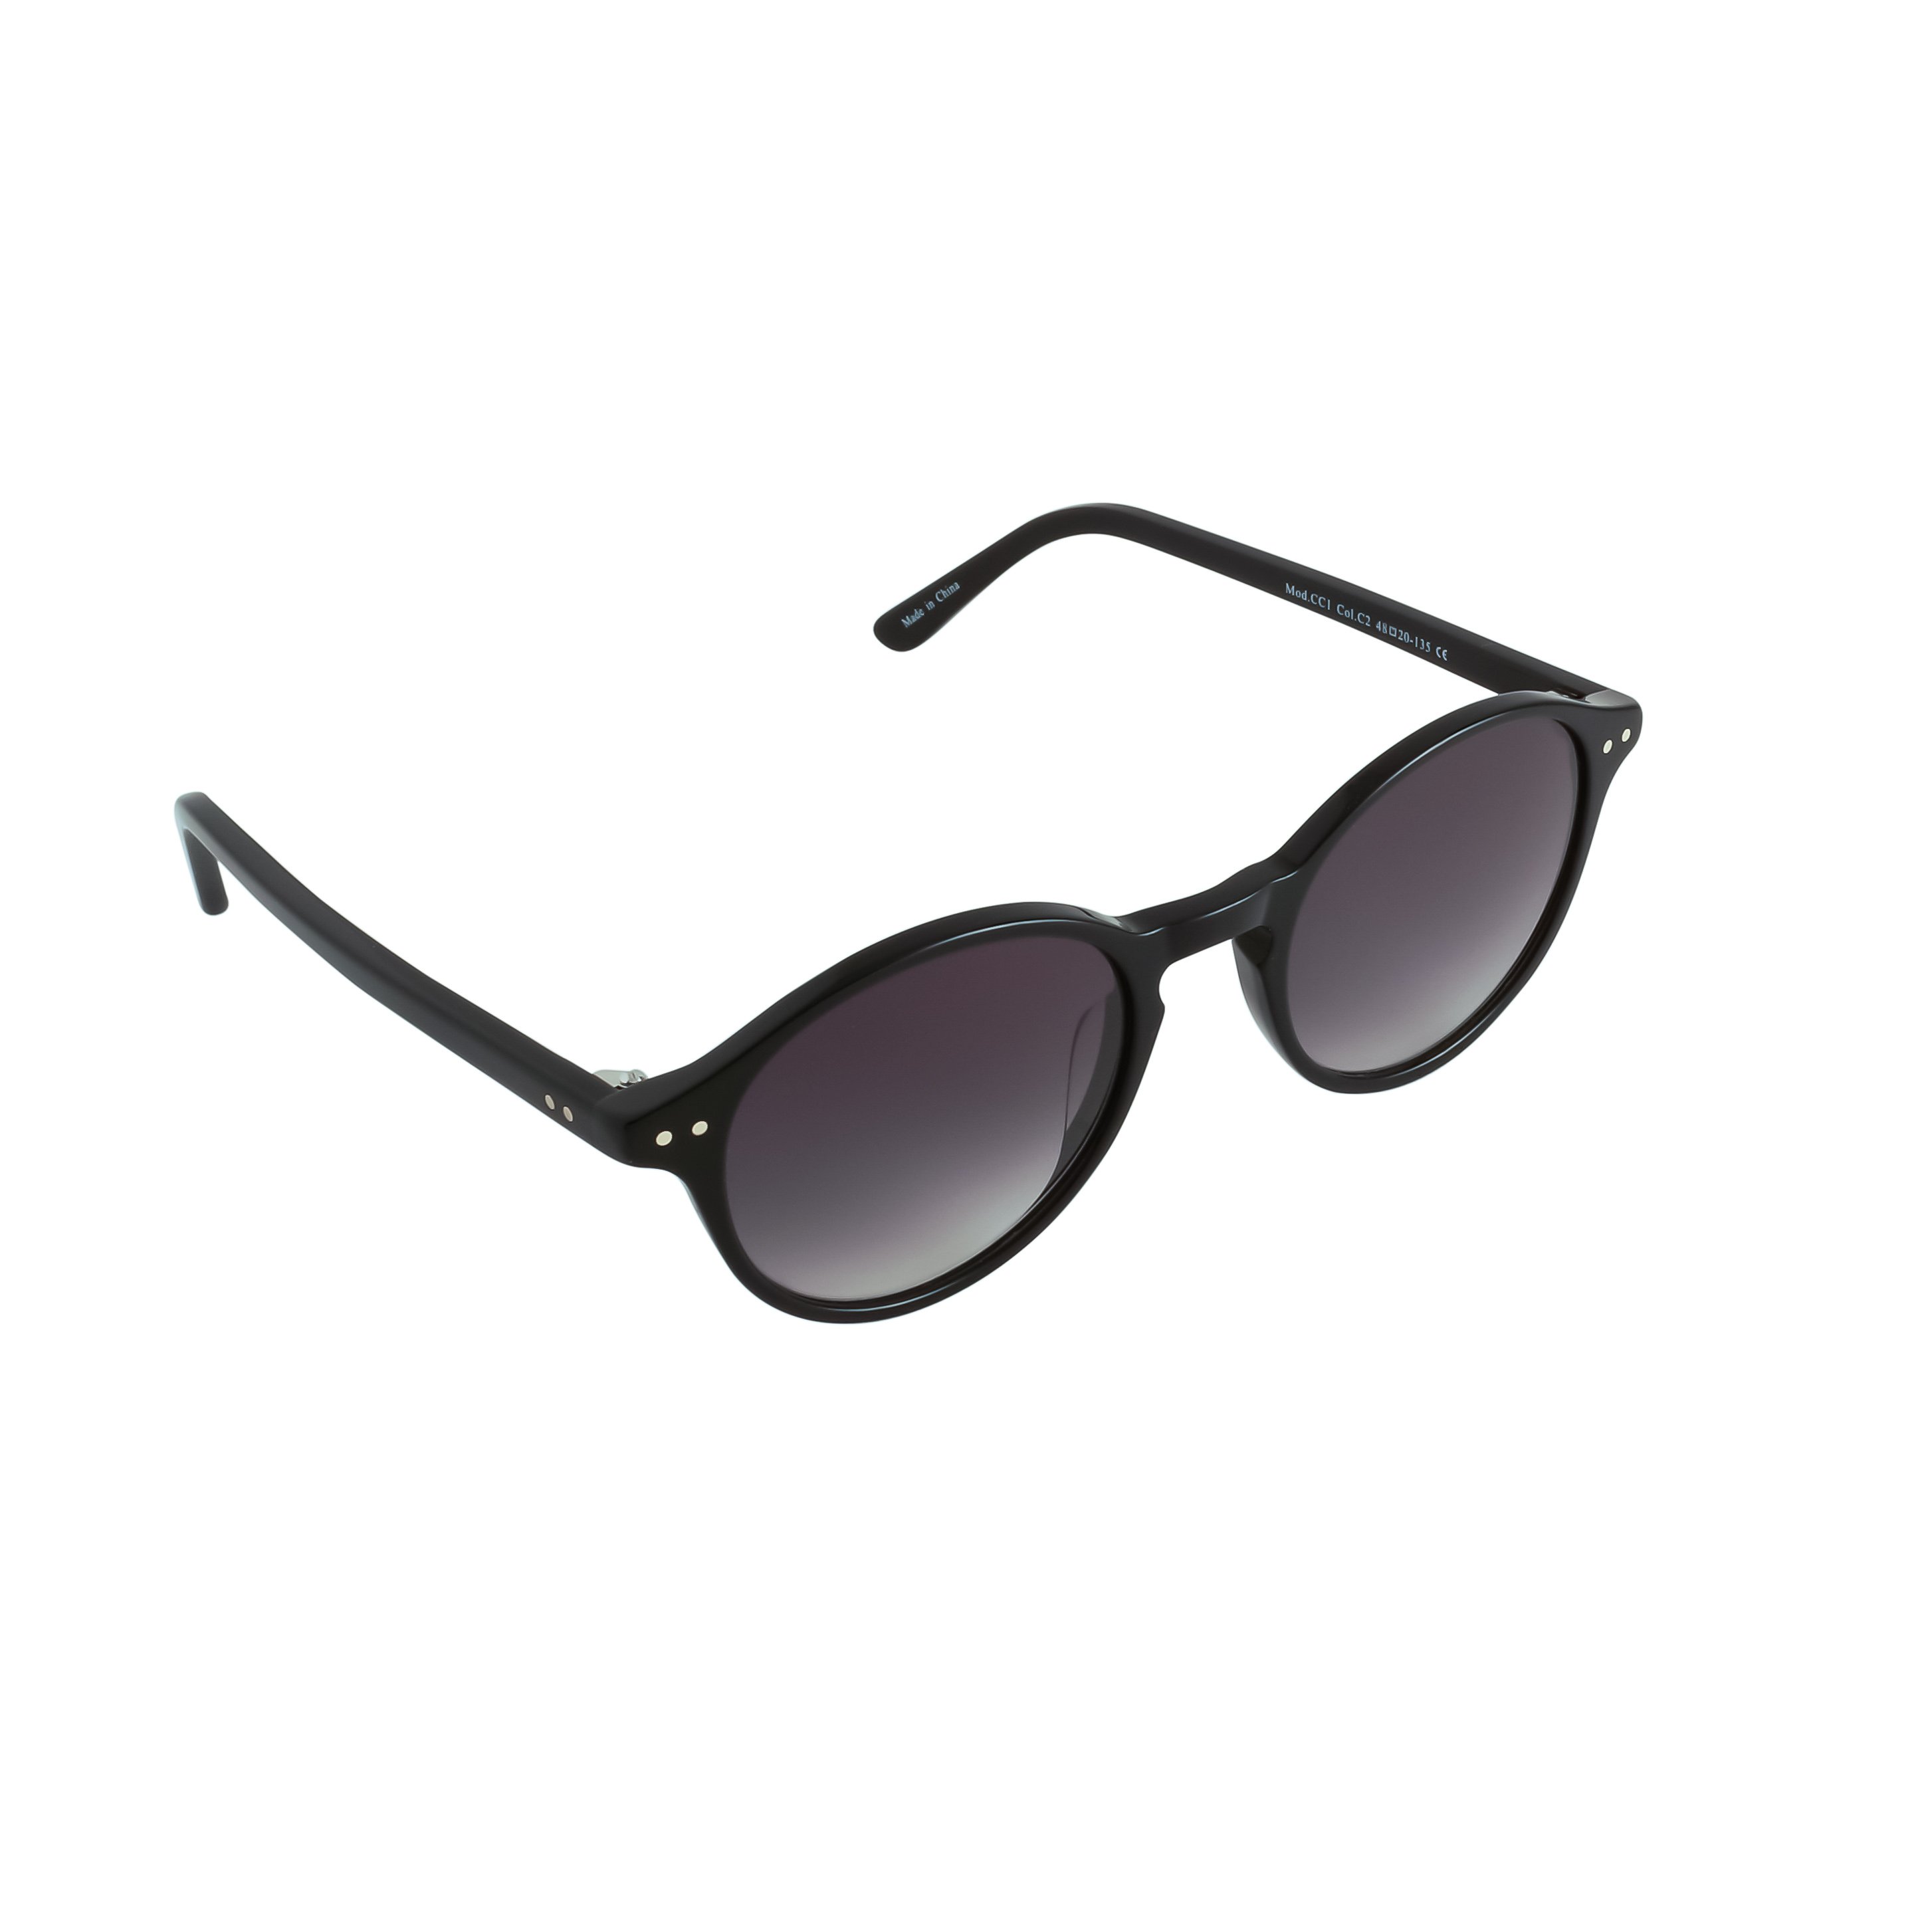 Callula Co. petite sunglasses side view